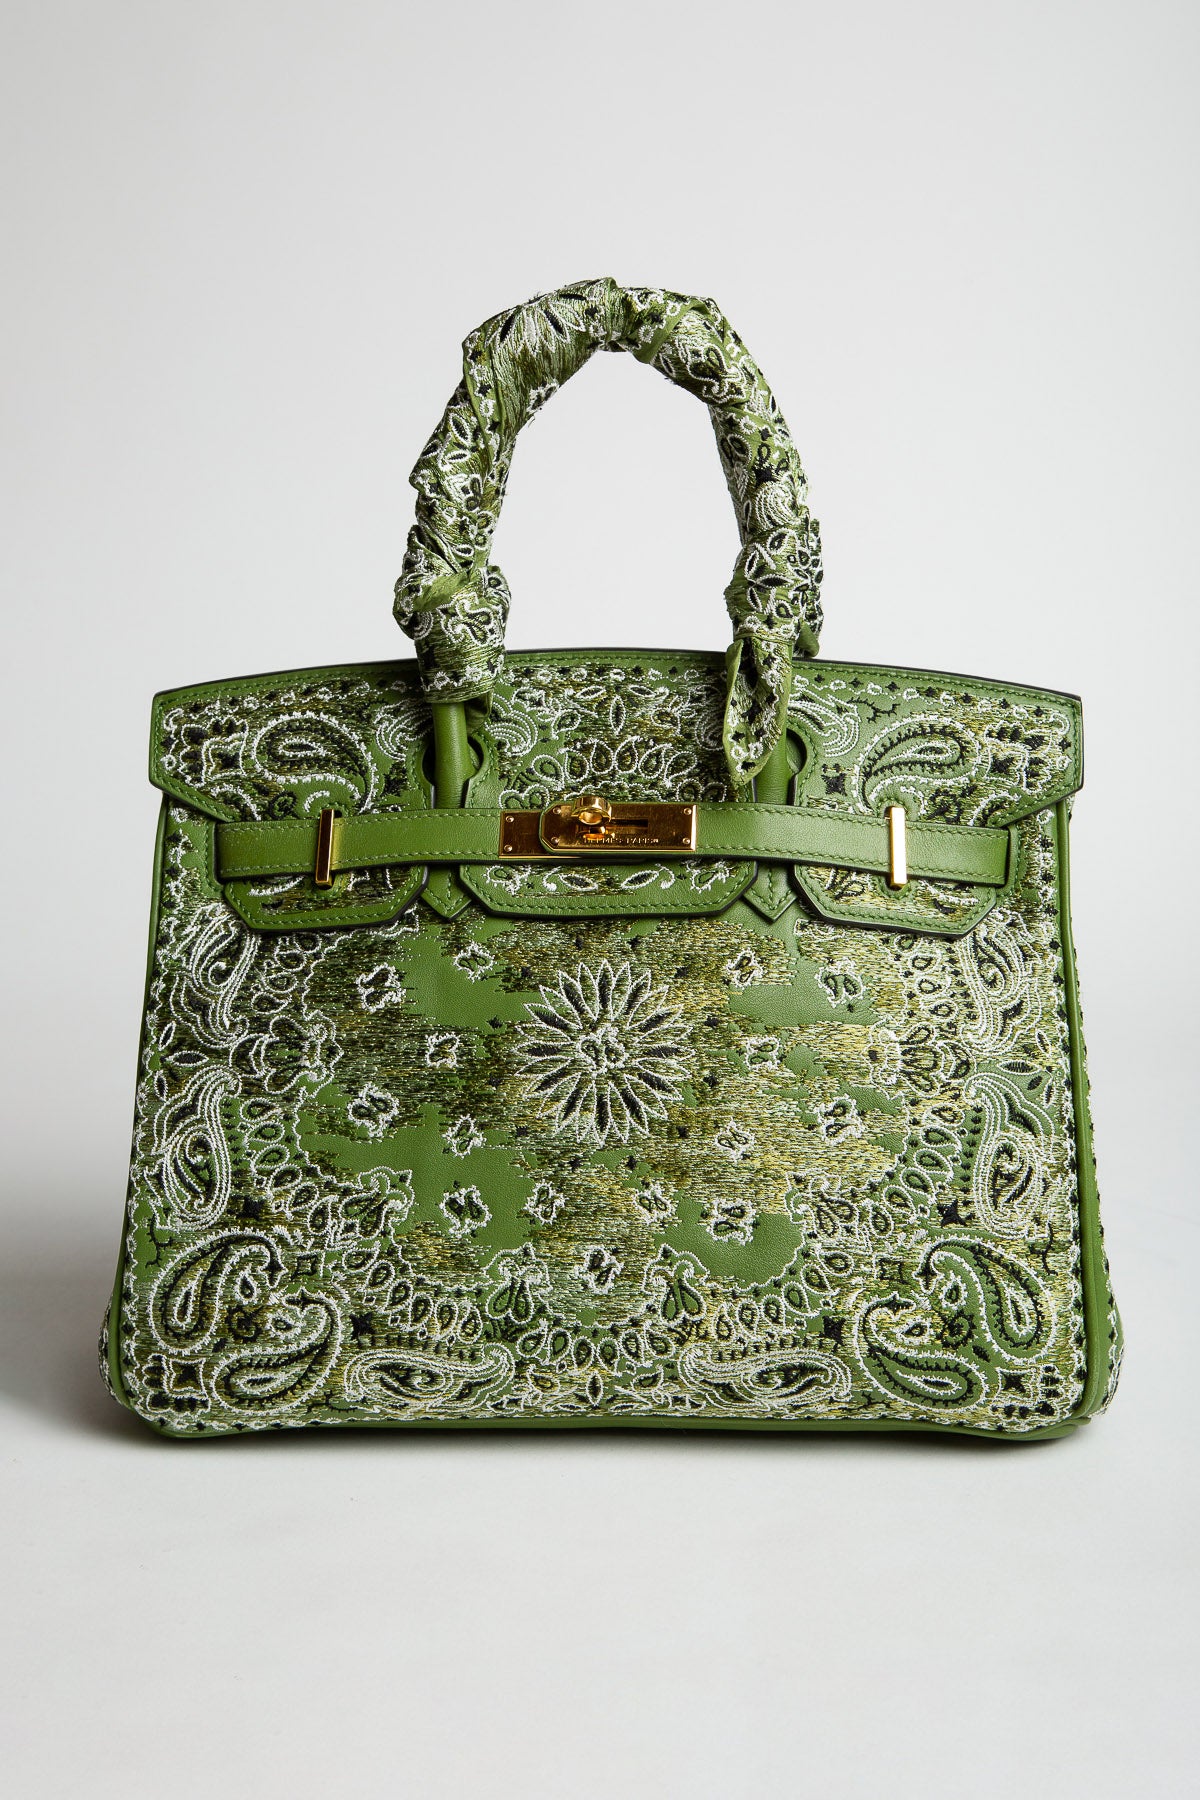 The Vintage Iconic Hermes Bag X Jay Ahr Collection “Bandana